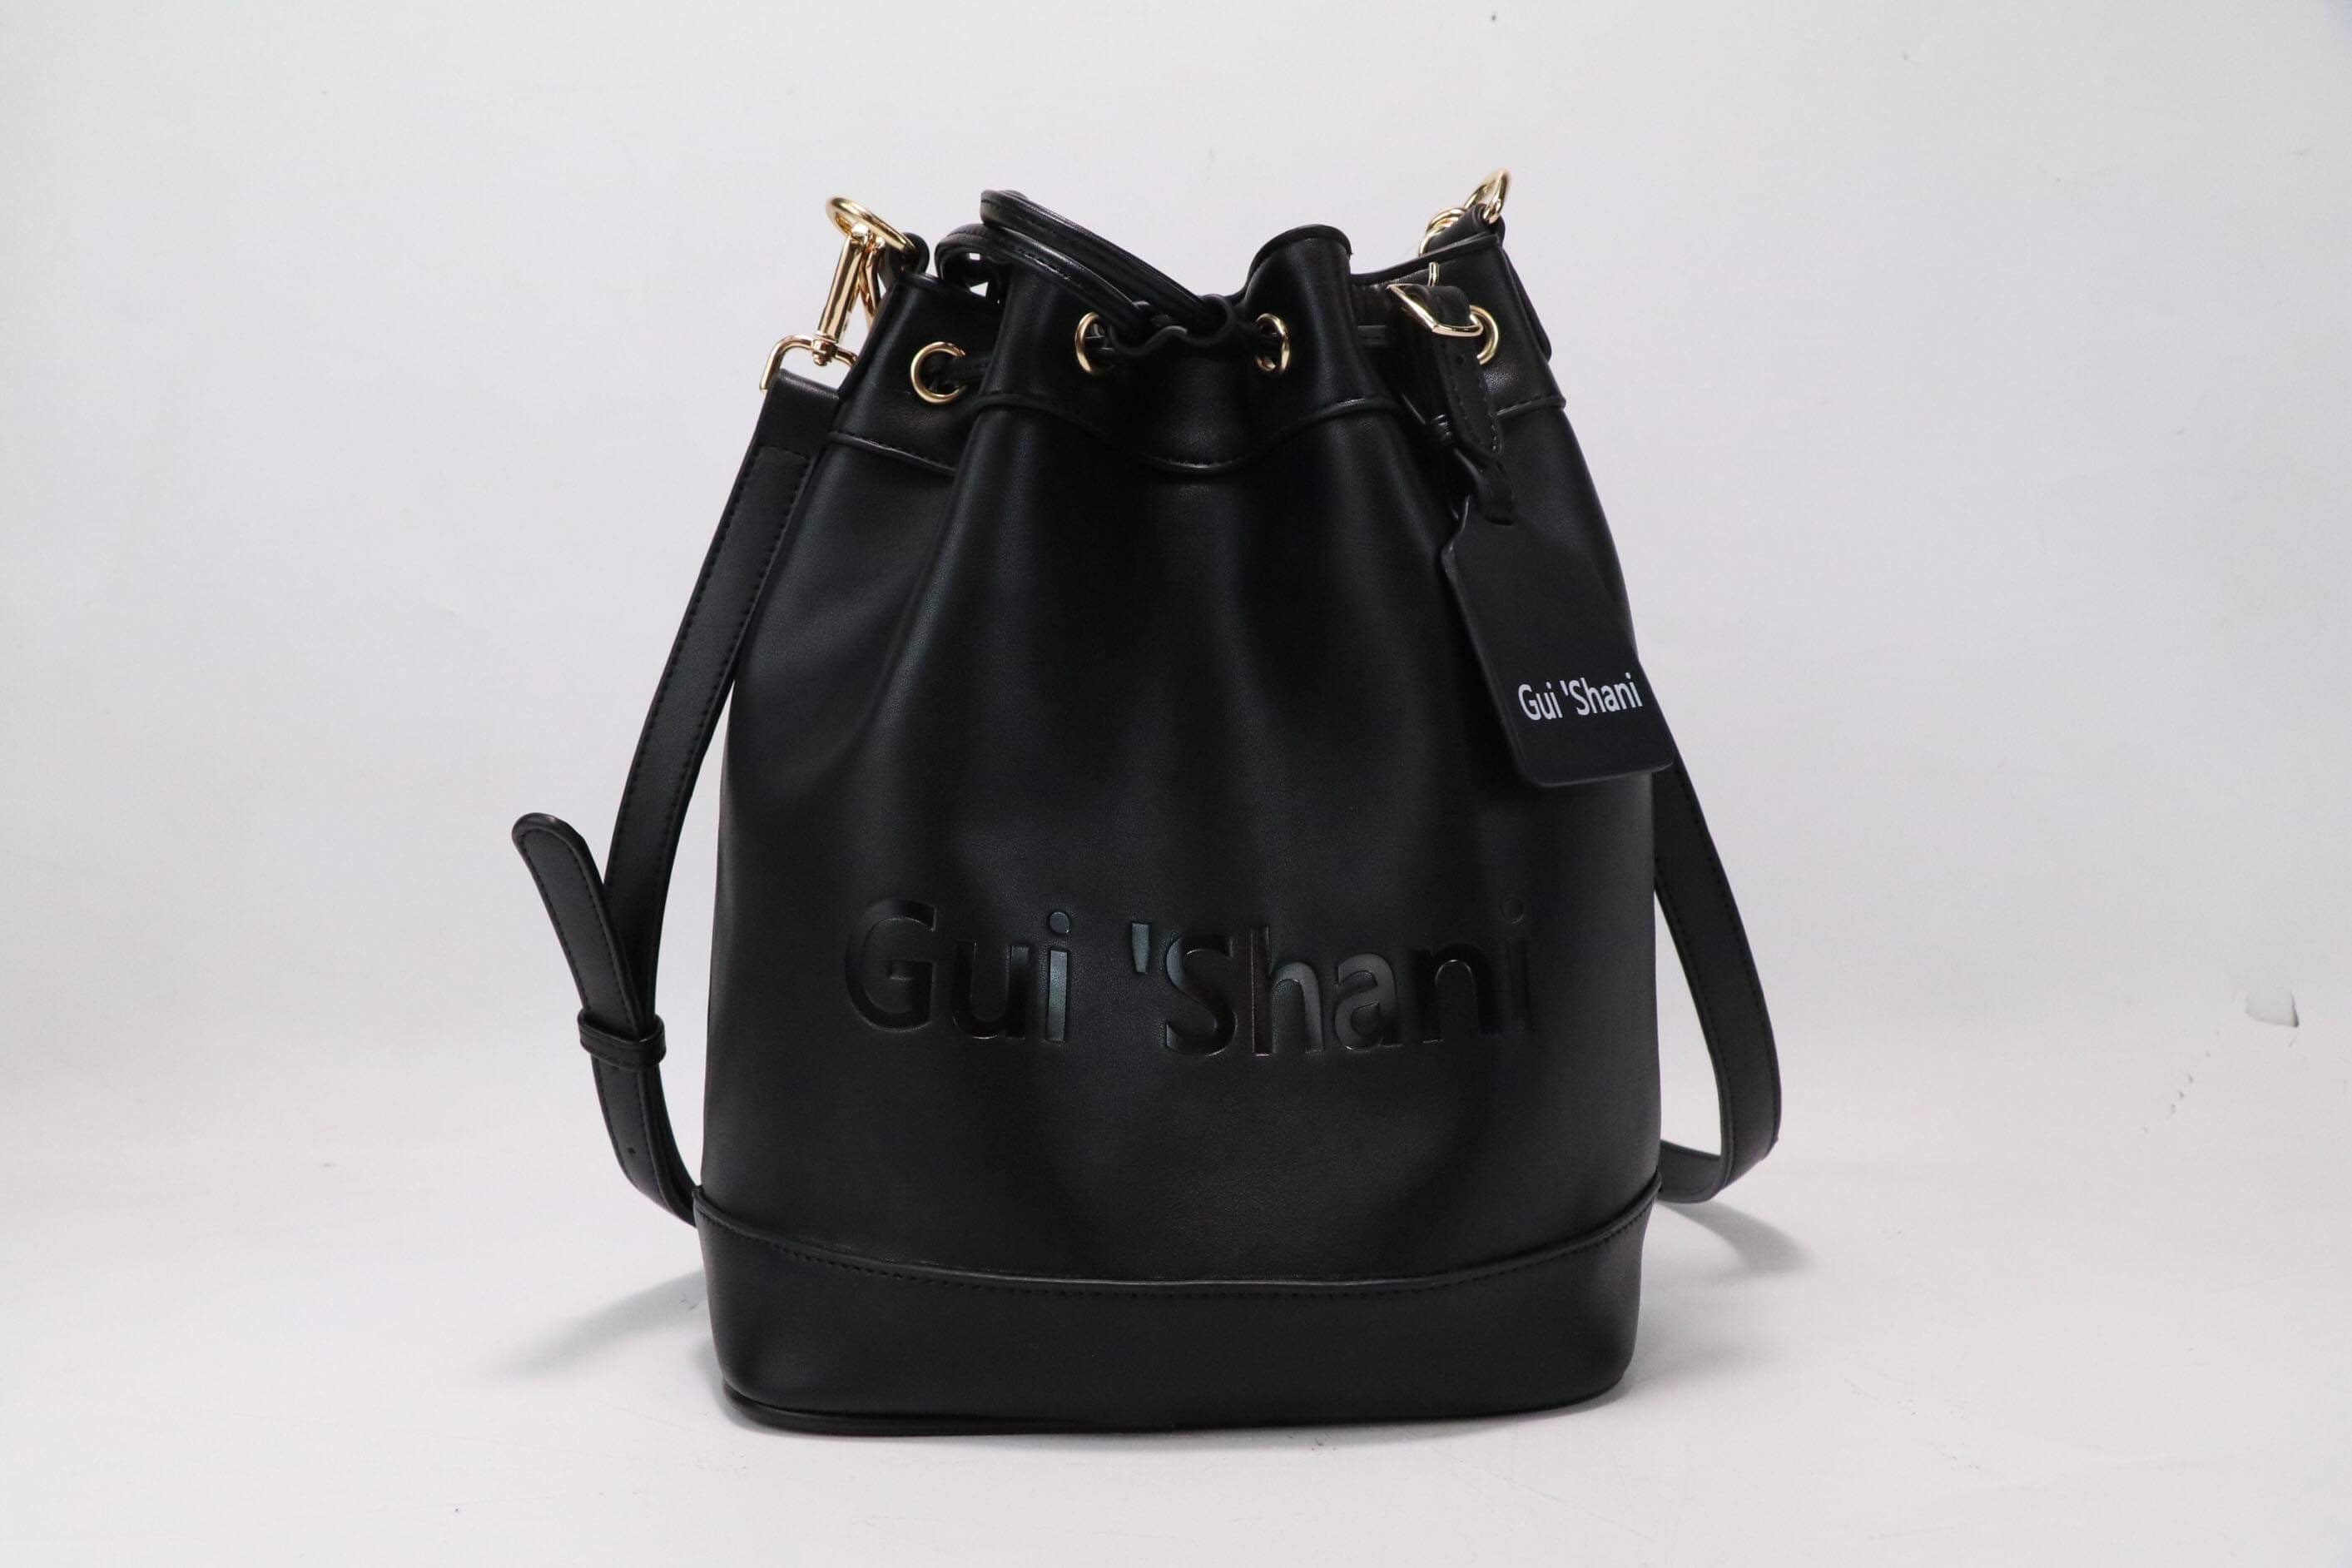 Santina Black Woven Bucket Bag for Women